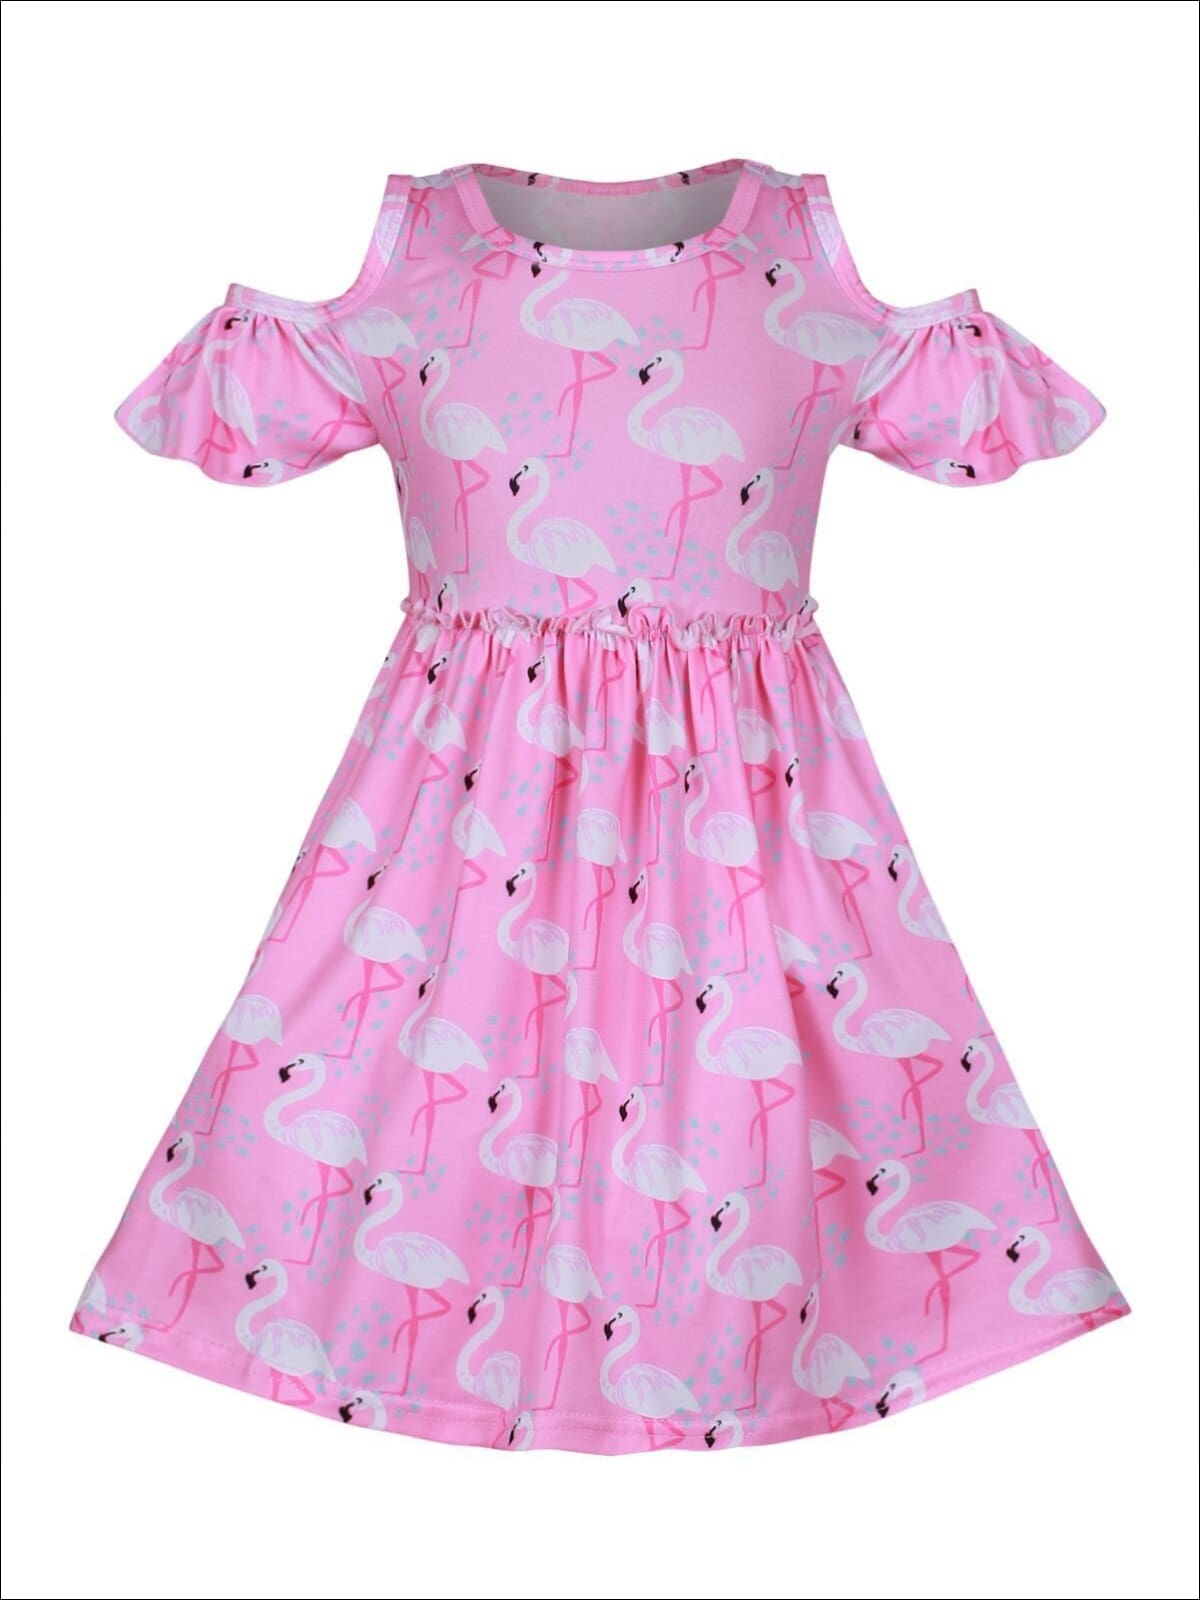 Girls Pink Flamingo Print A-Line Cold Off the Shoulder Dress - Girls Spring Casual Dress